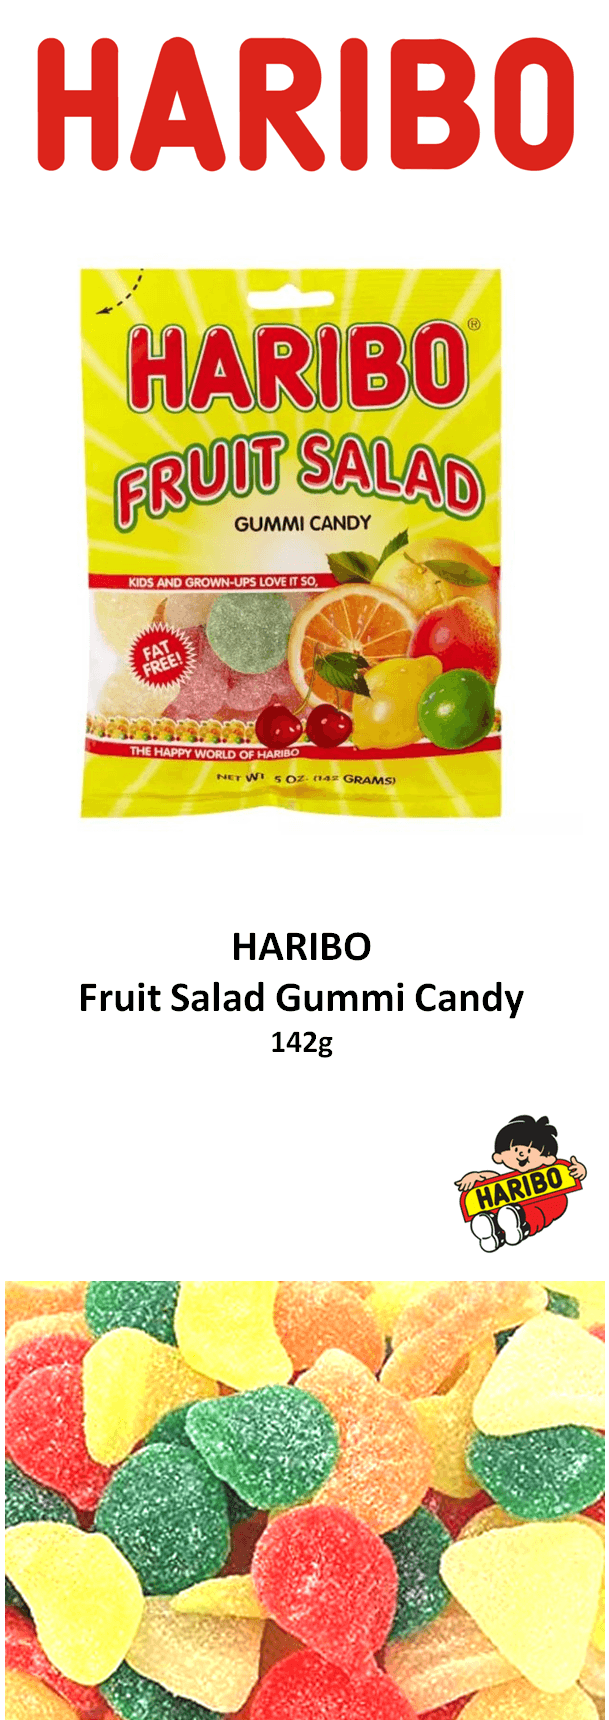 Fruit Salad Gummi Candy